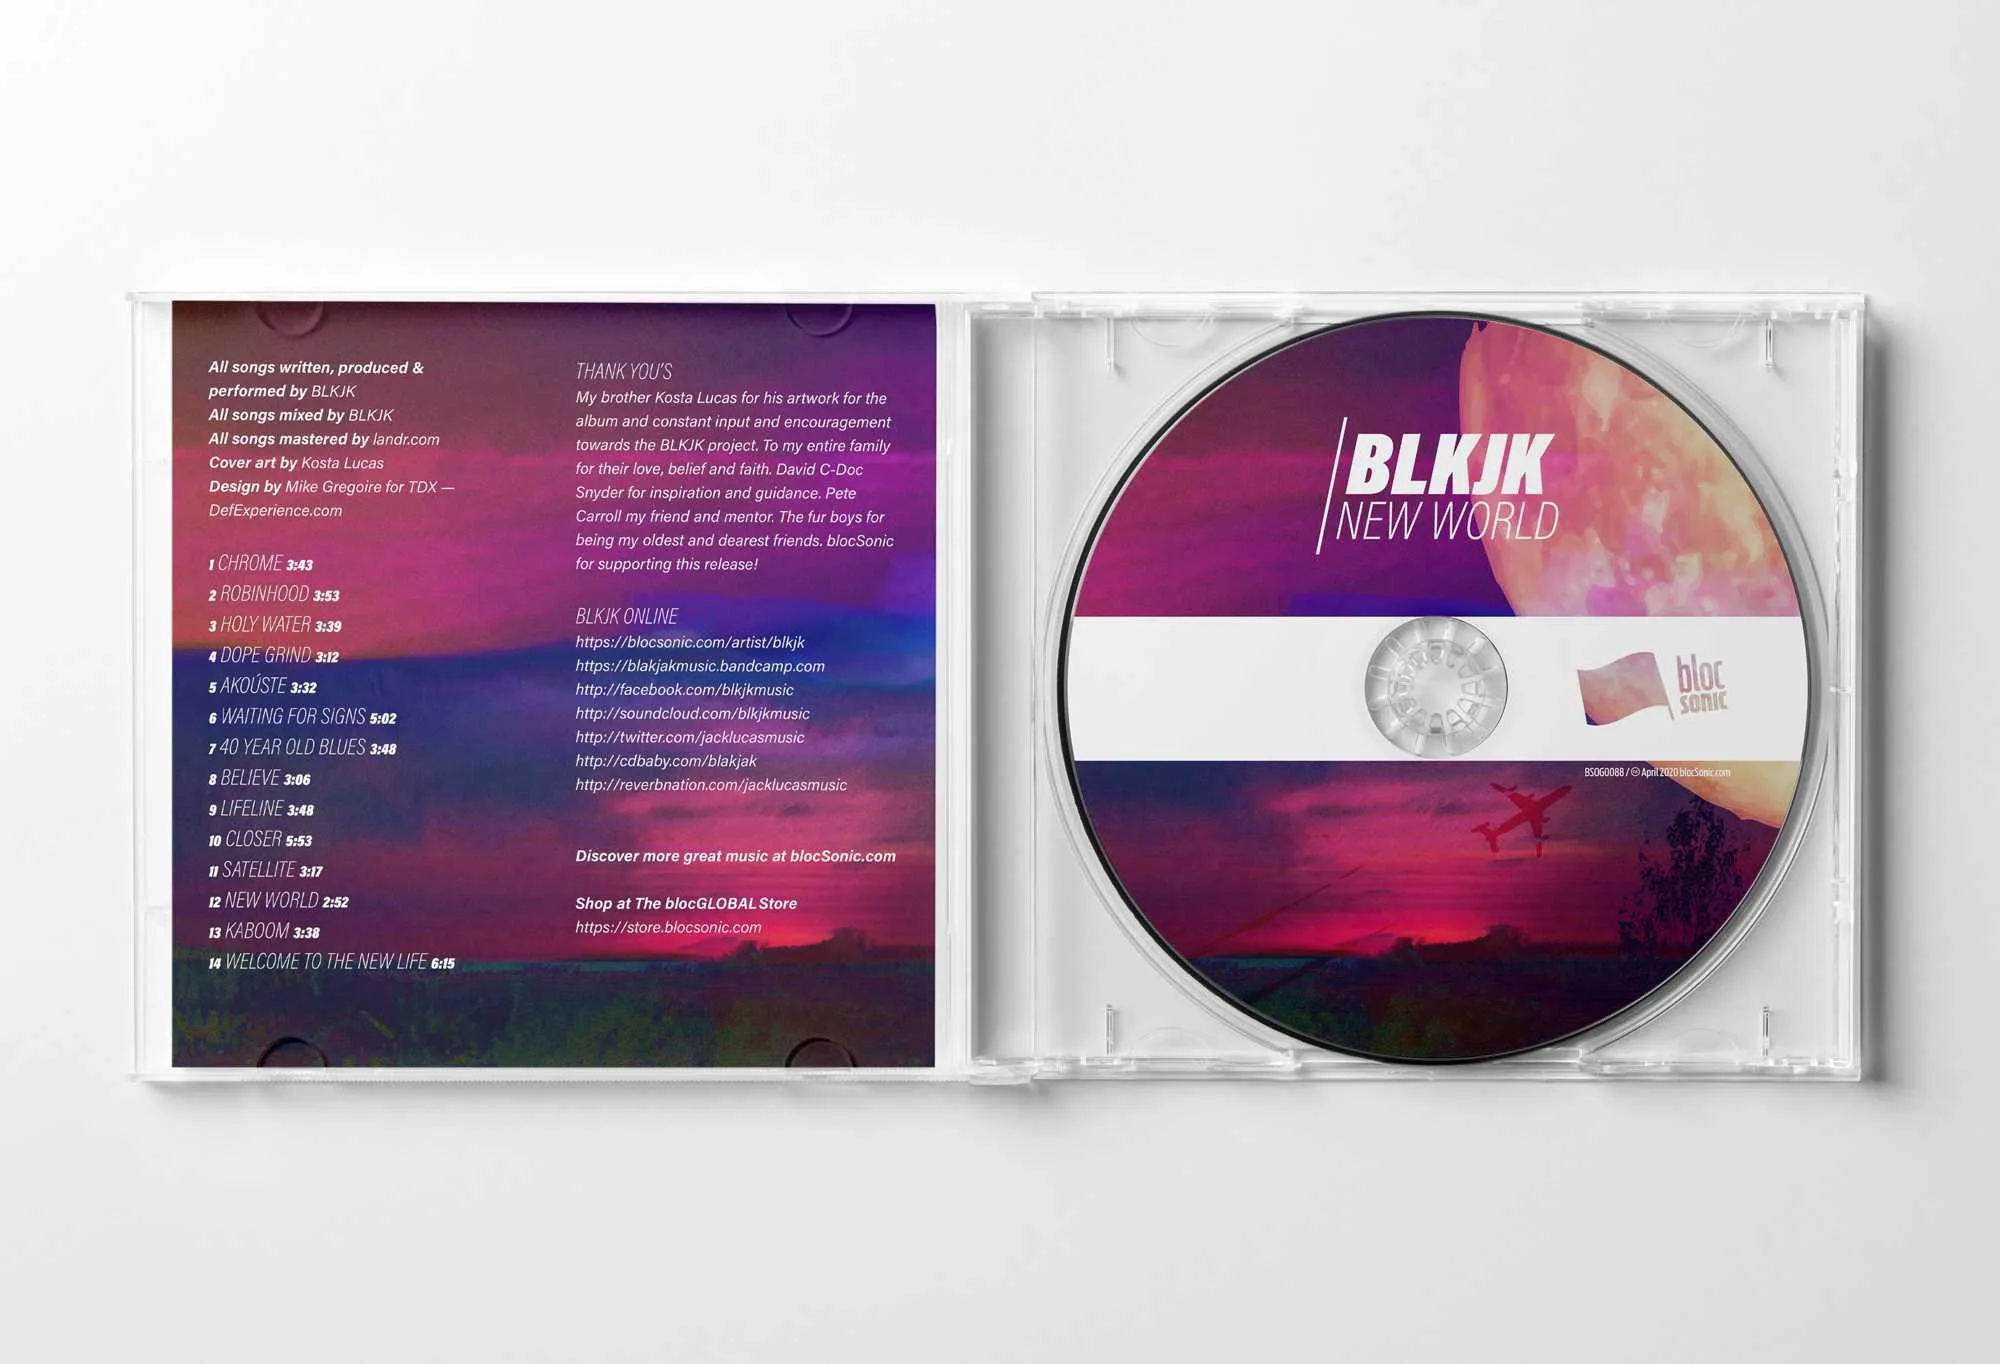 Album promo for “New World” by BLKJK